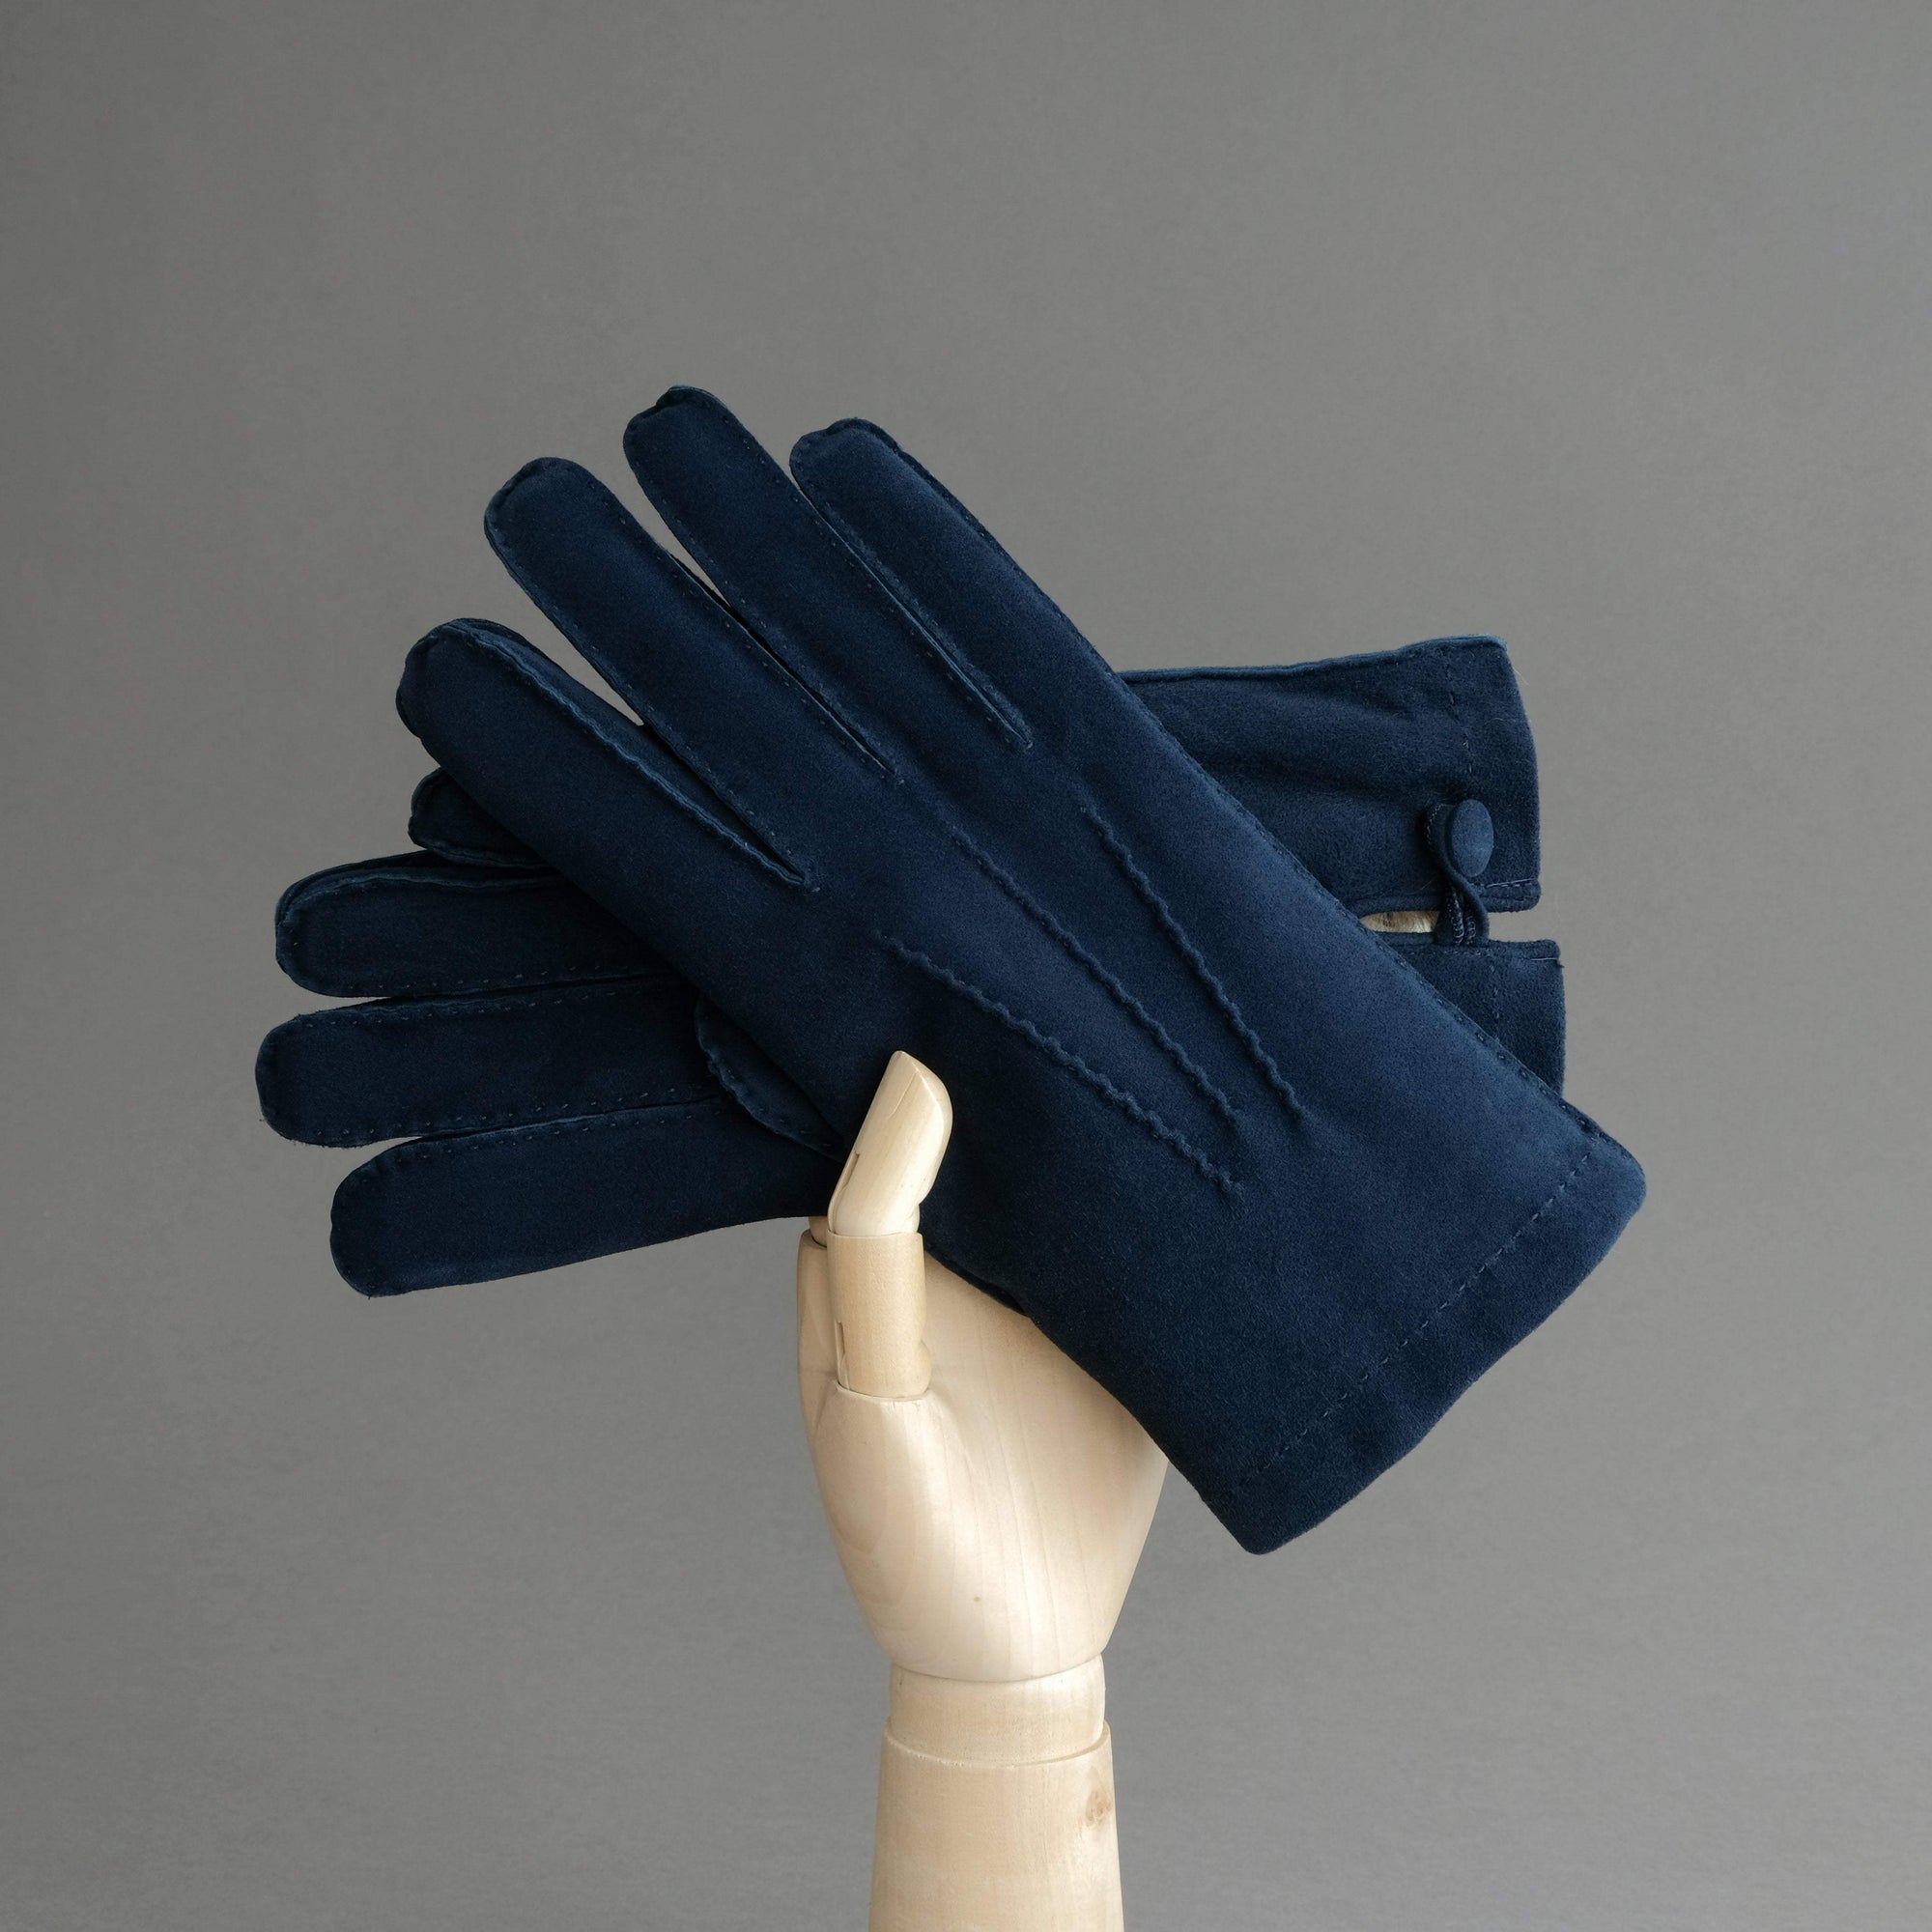 Gentlemen's Buttoned Gloves from Dark Blue Reindeer Suede Lined with Orylag Fur - TR Handschuhe Wien - Thomas Riemer Handmade Gloves